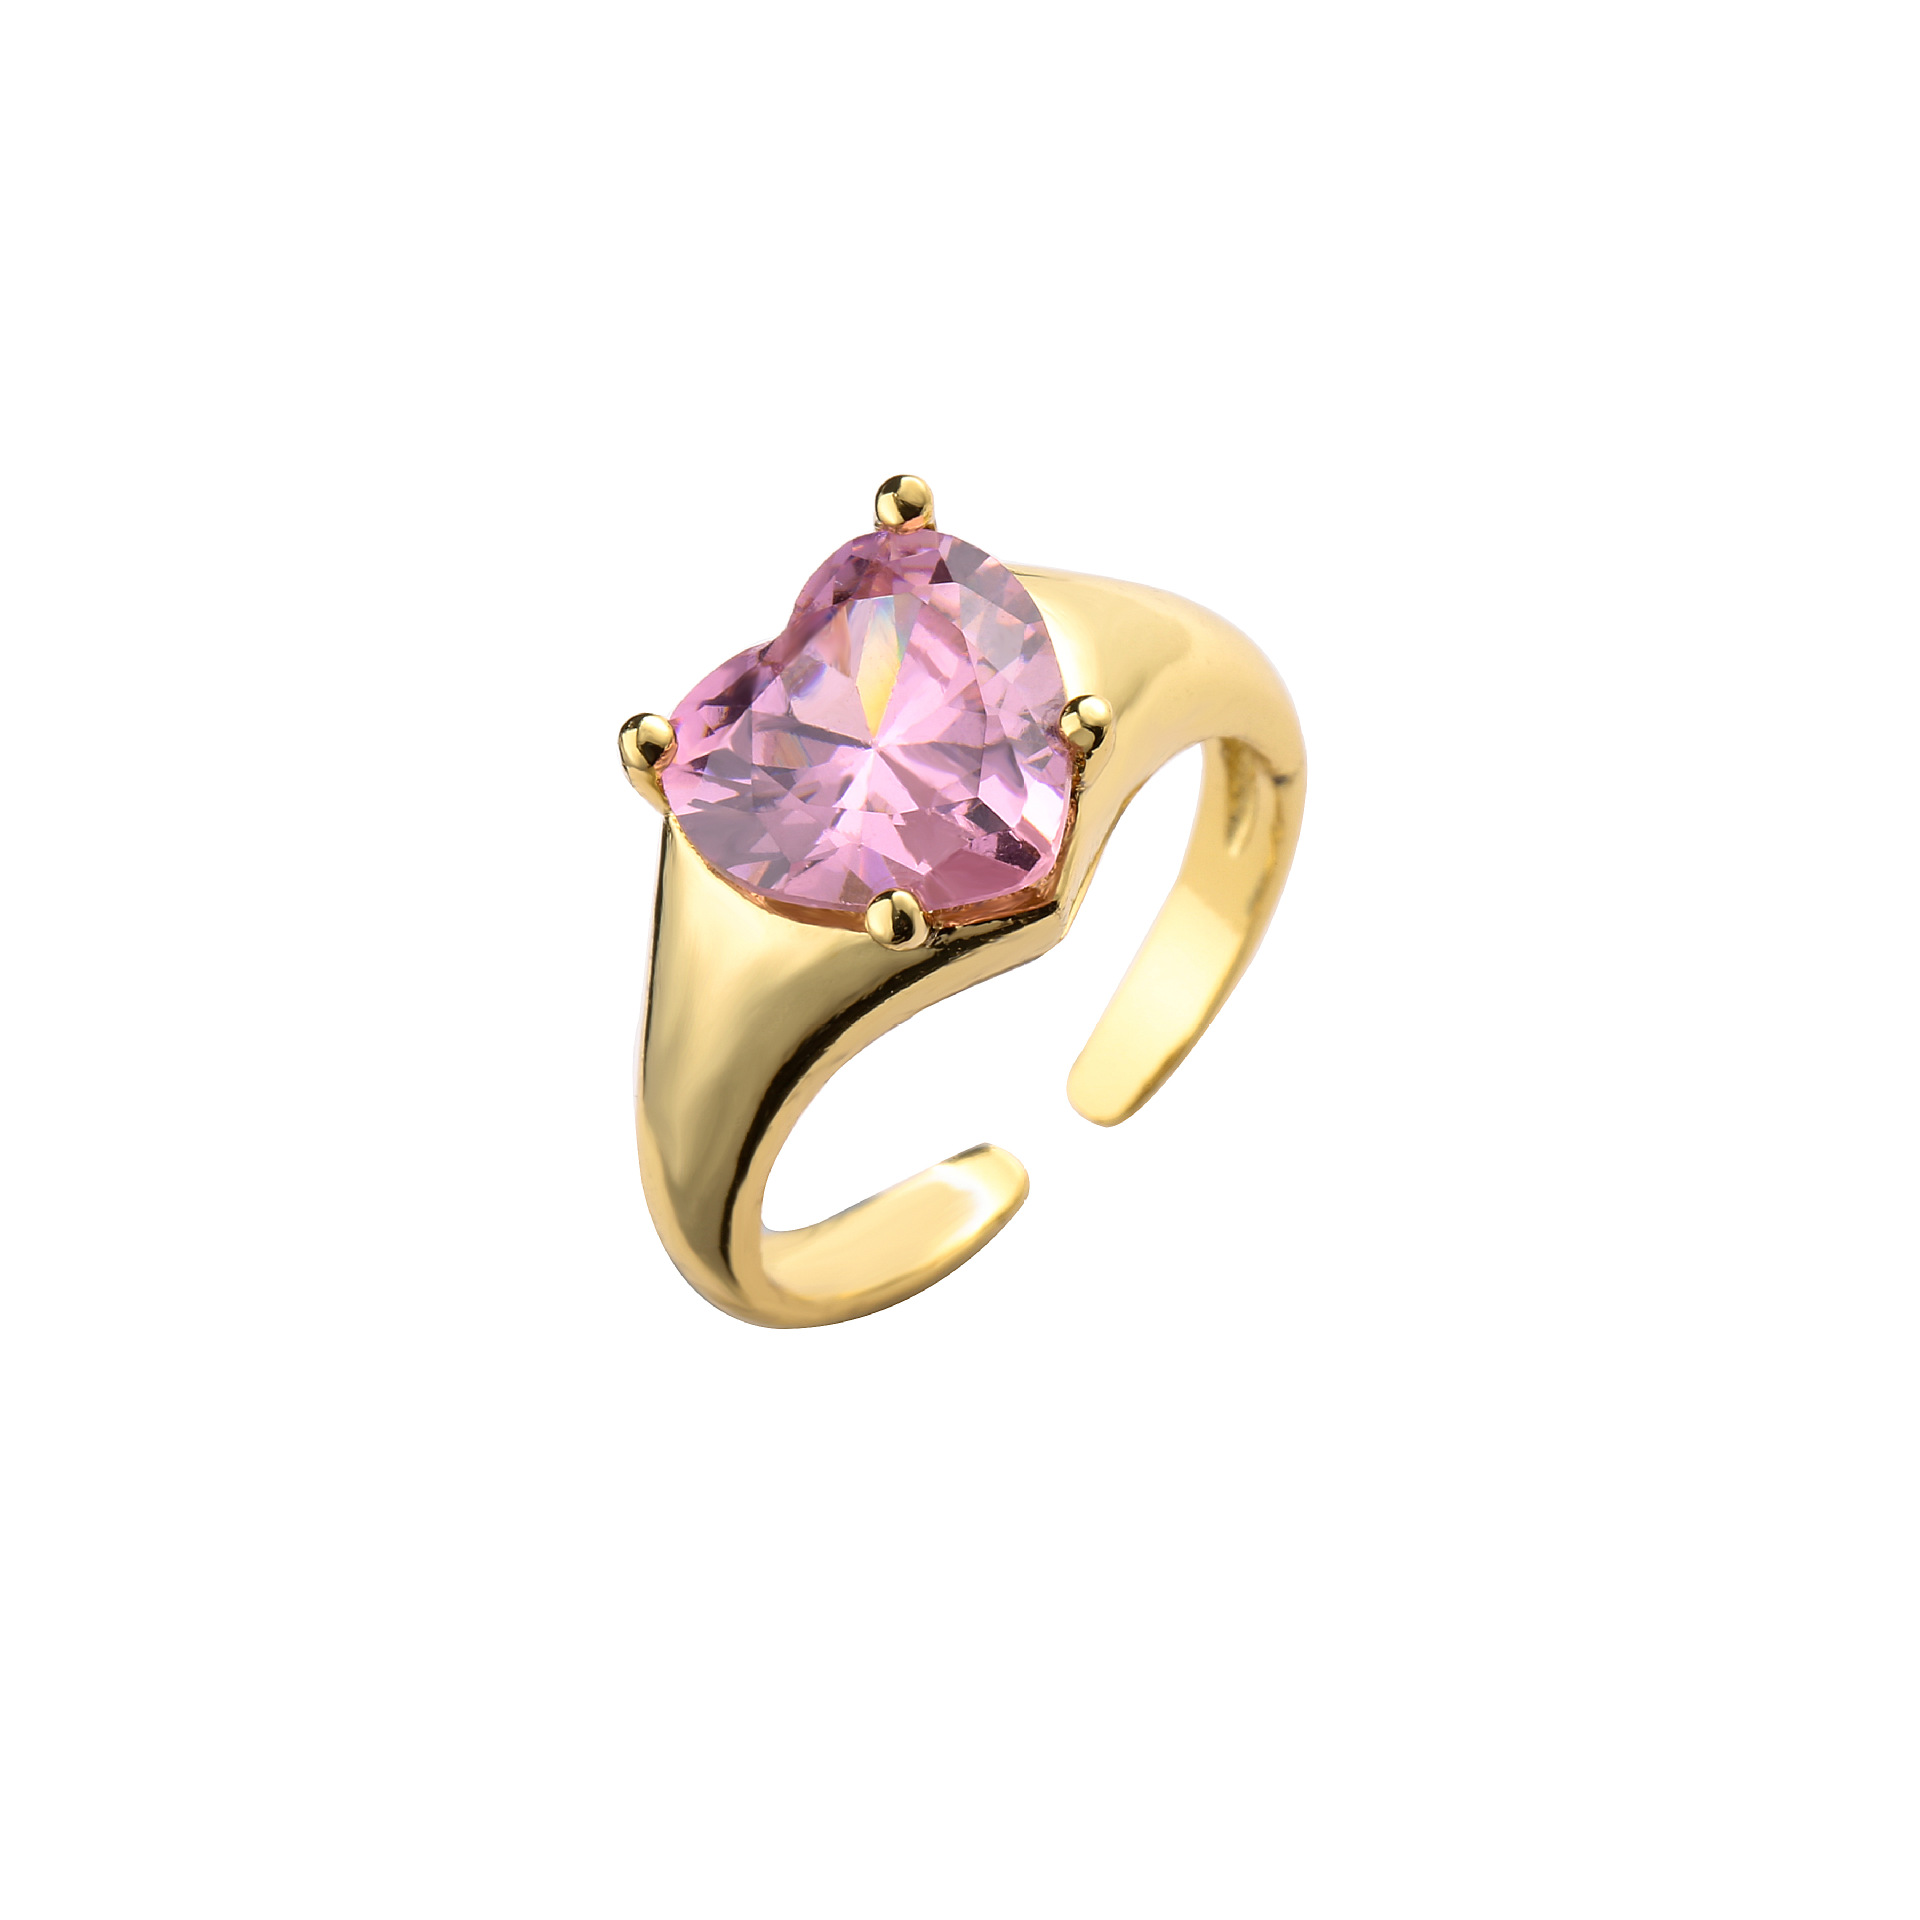 2:Gold Pink Diamond 1